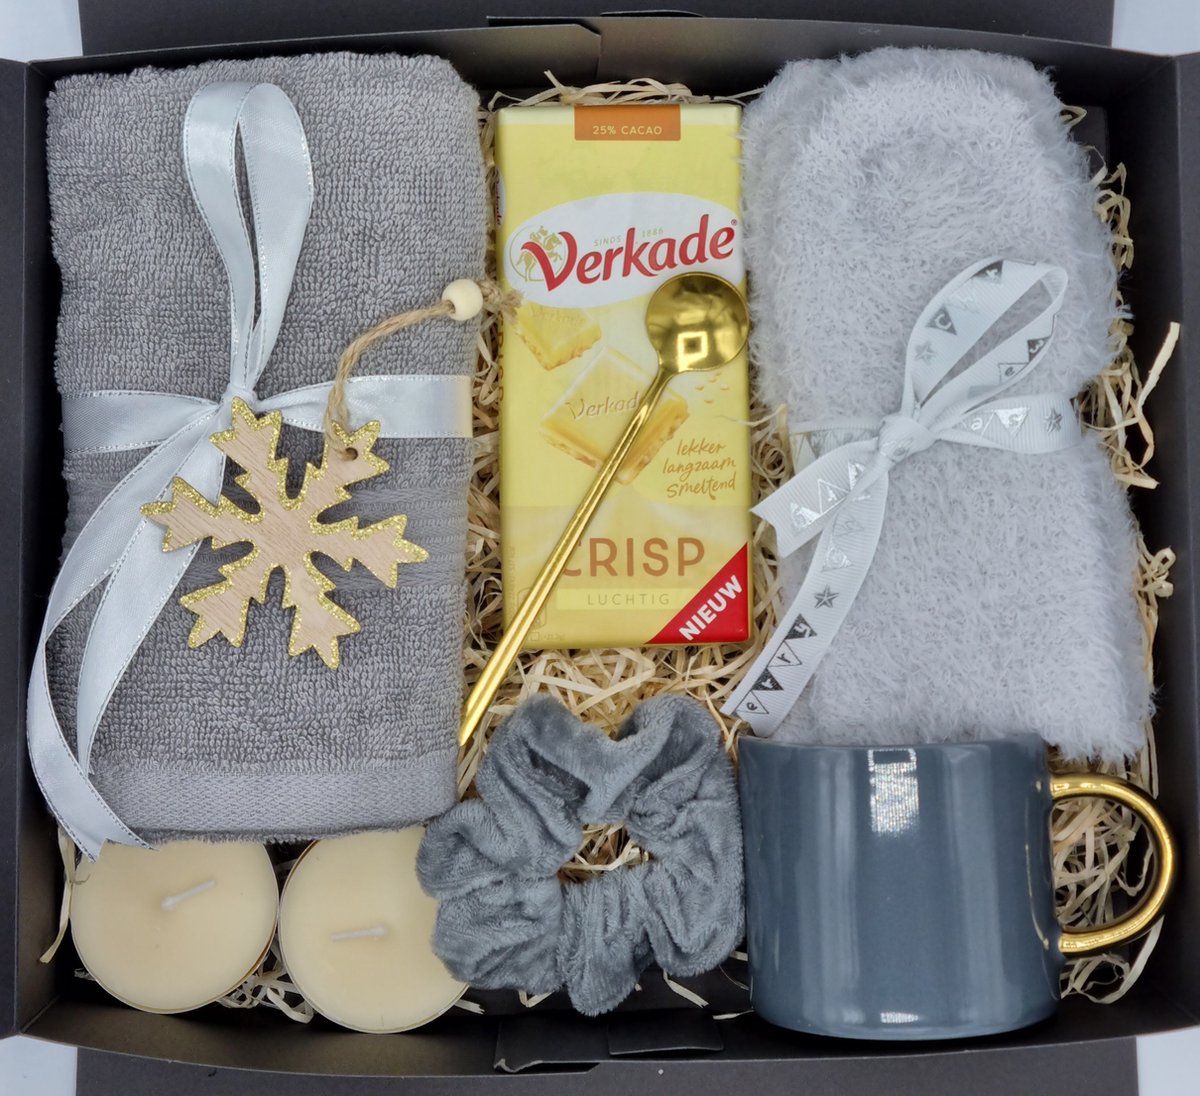 Cadeau voor Vrouw - Verwenpakket - Cadeaupakket - Giftset - Verjaardag - Moederdag - Valentijnsdag - Cadeau Box - Mok - Beker - Sokken - Scrunchie - Chocolade - Valentijn Cadeautje voor Haar - Kerstpakket Vrouw - Cadeau Vriendin, Moeder, Mama, Zus - ’merkloos’